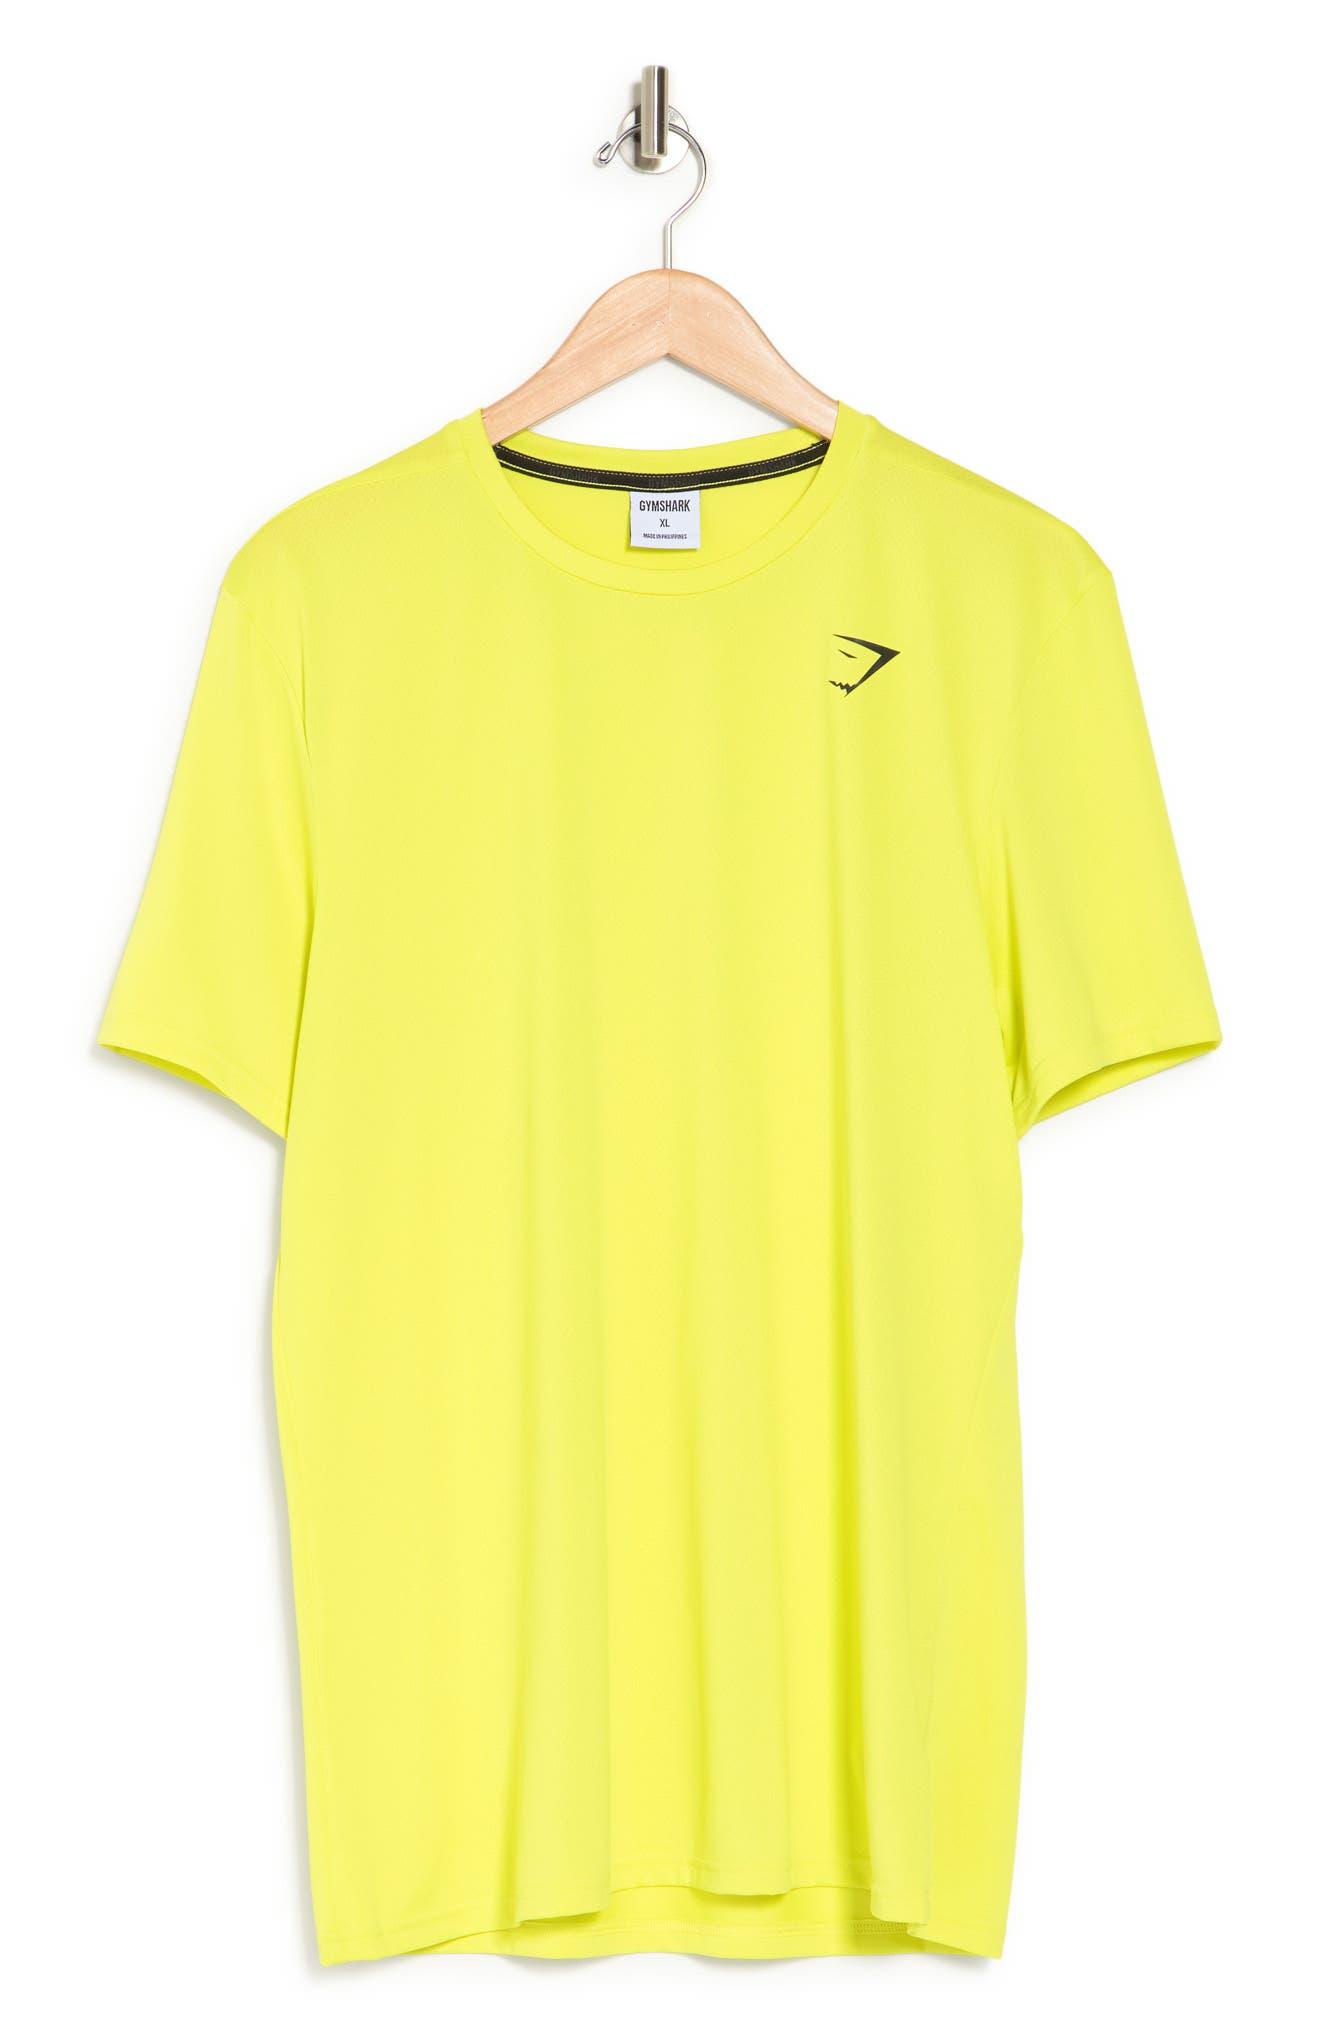 GYMSHARK Arrival Slim Short-sleeve Top in Yellow for Men